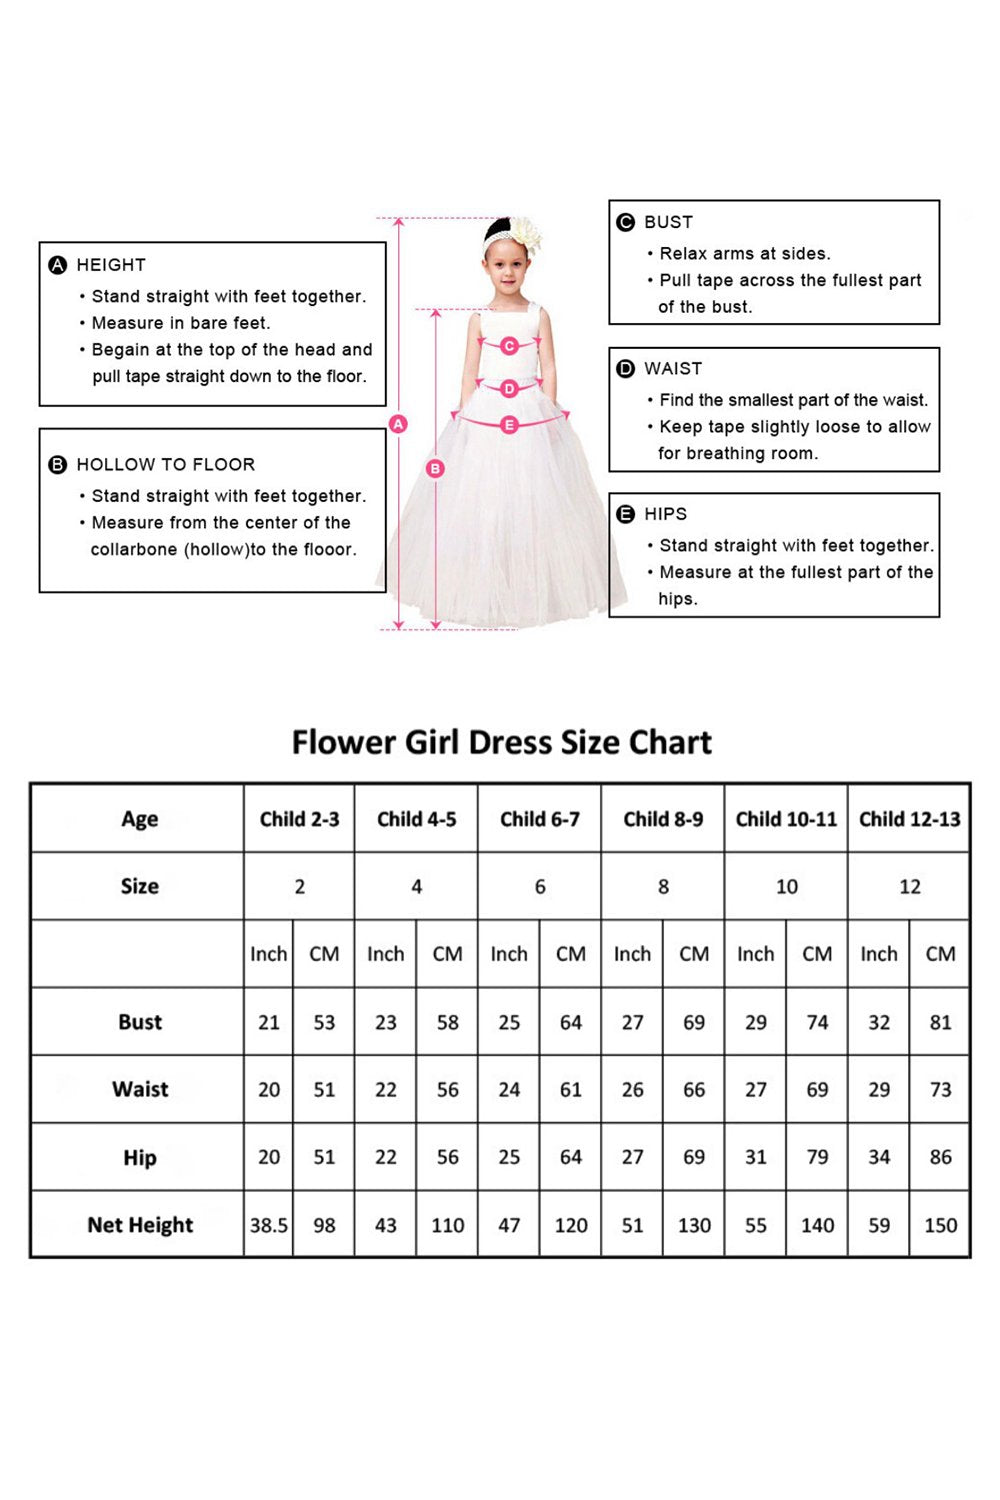 Ball Gown Floor Length Tulle Lace Flower Girl Dress CF0304